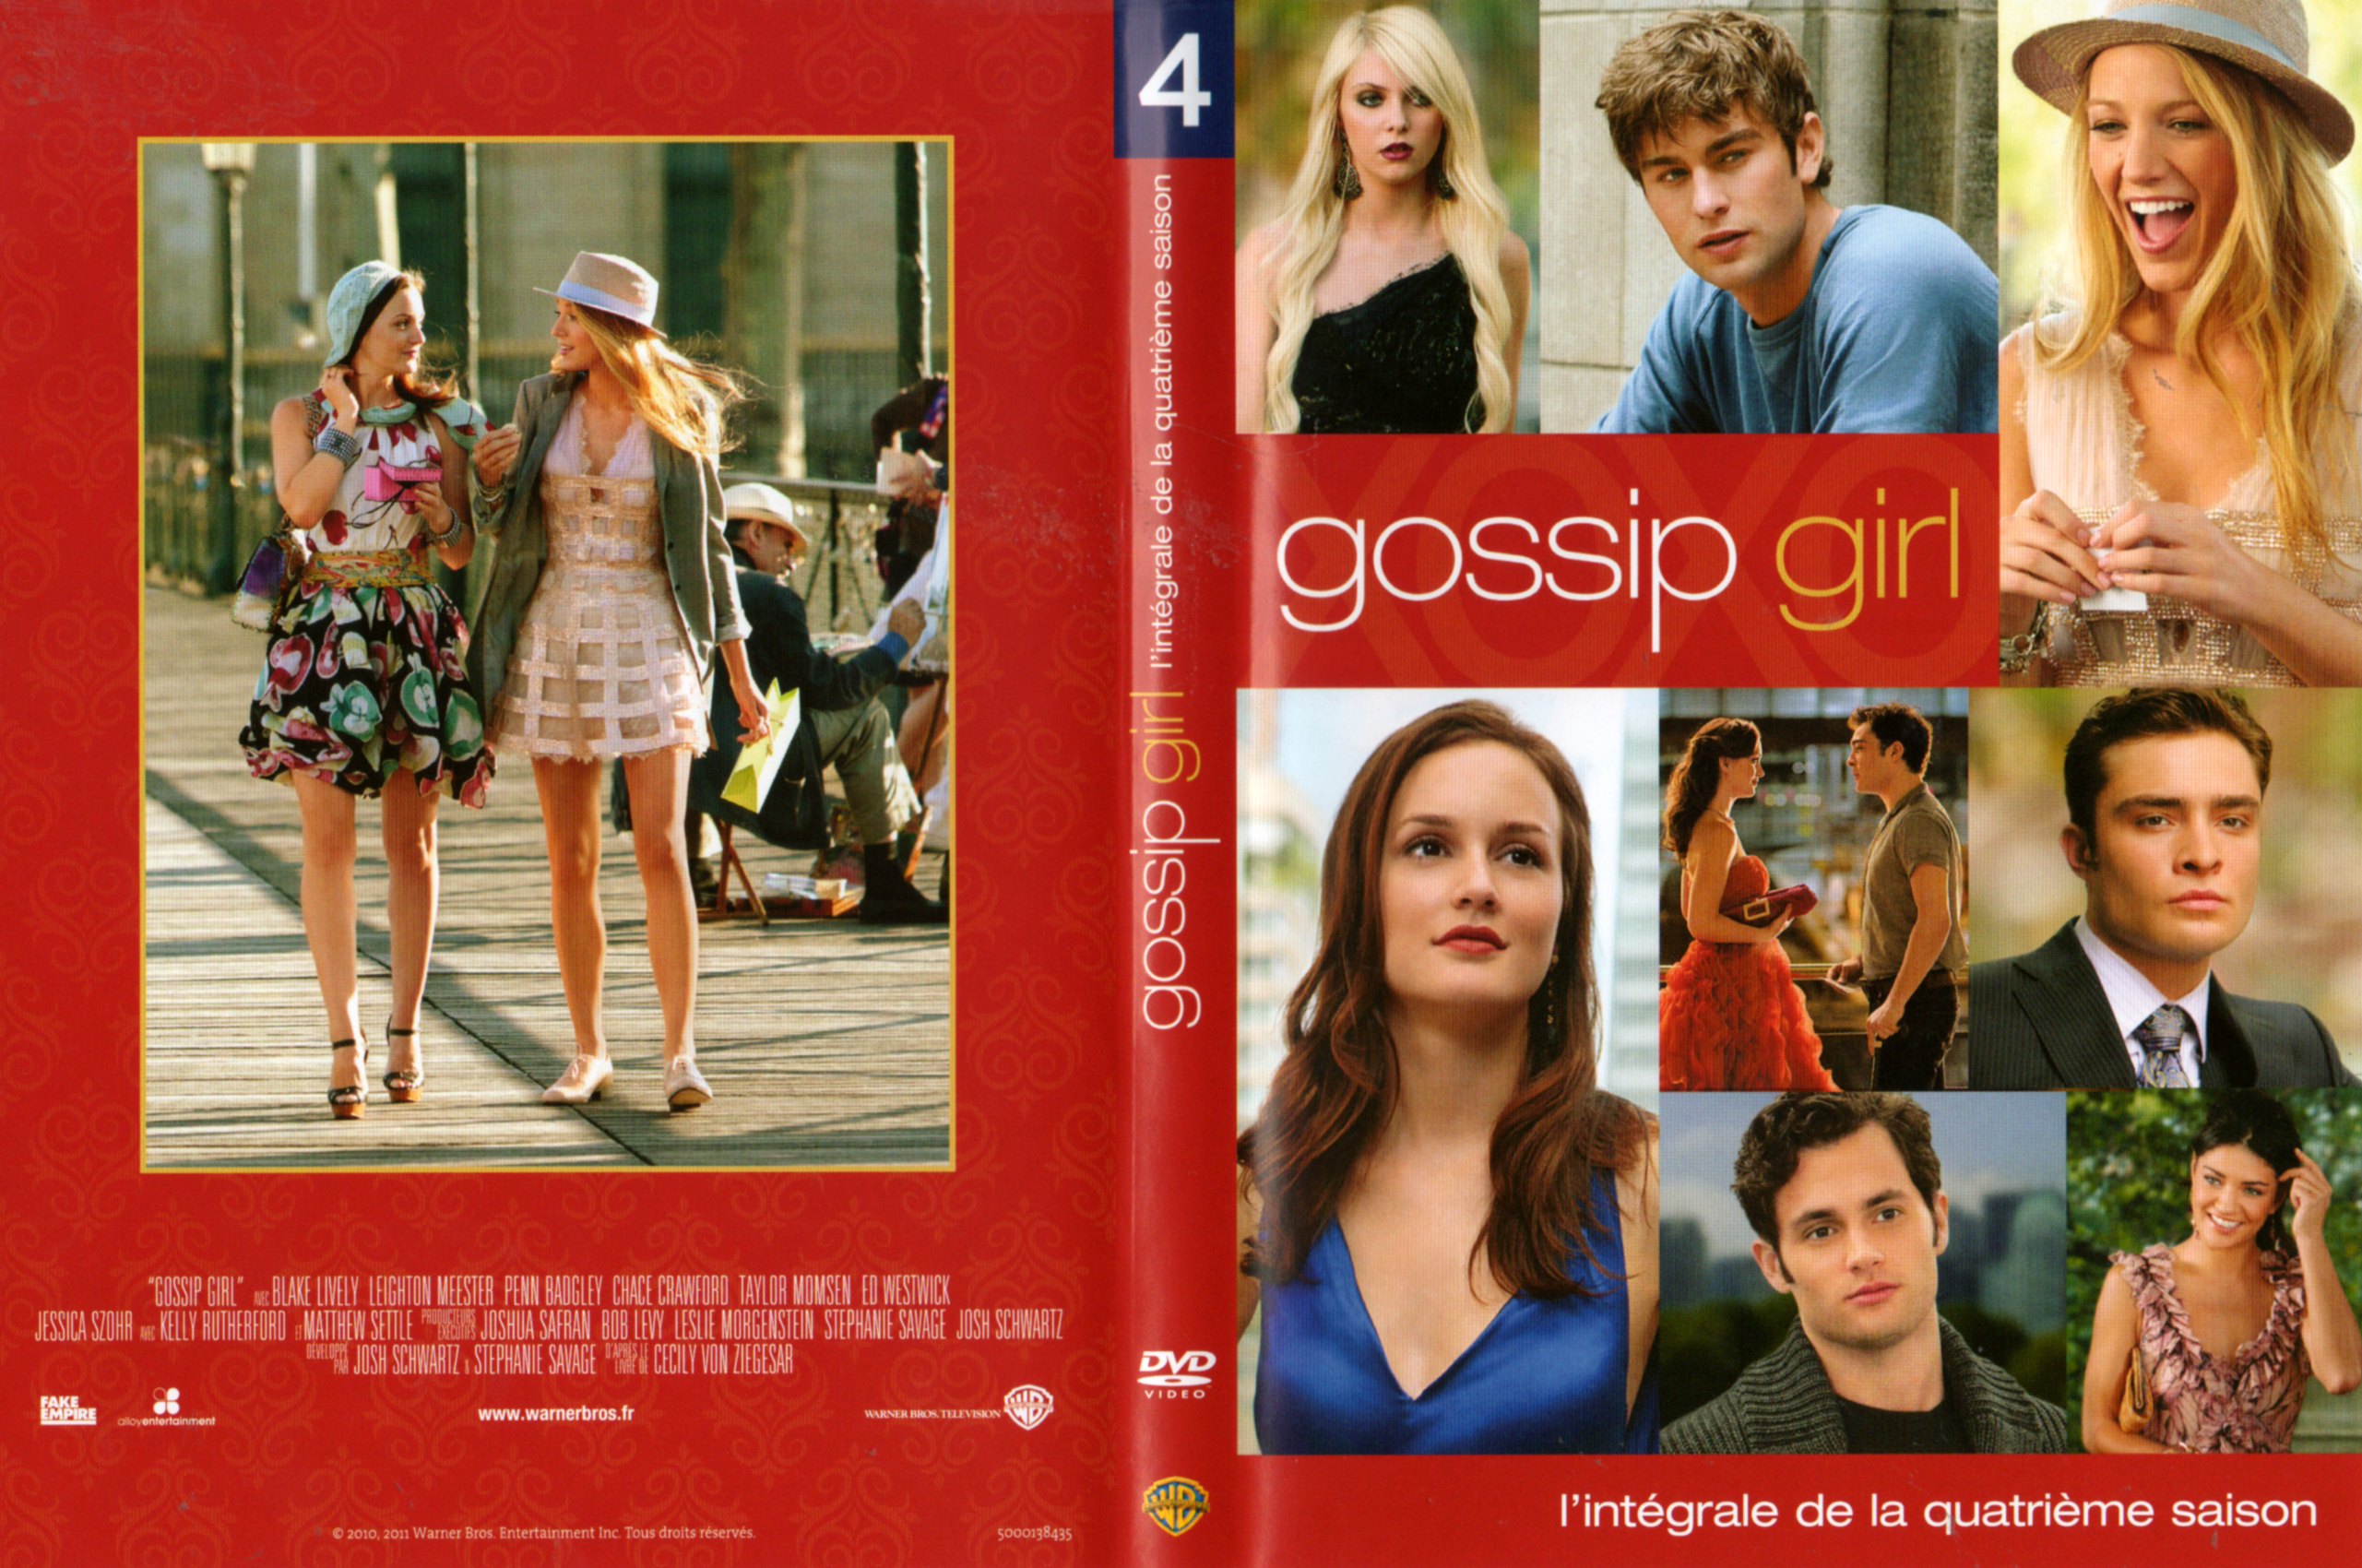 Jaquette DVD Gossip girl Saison 4 COFFRET v2